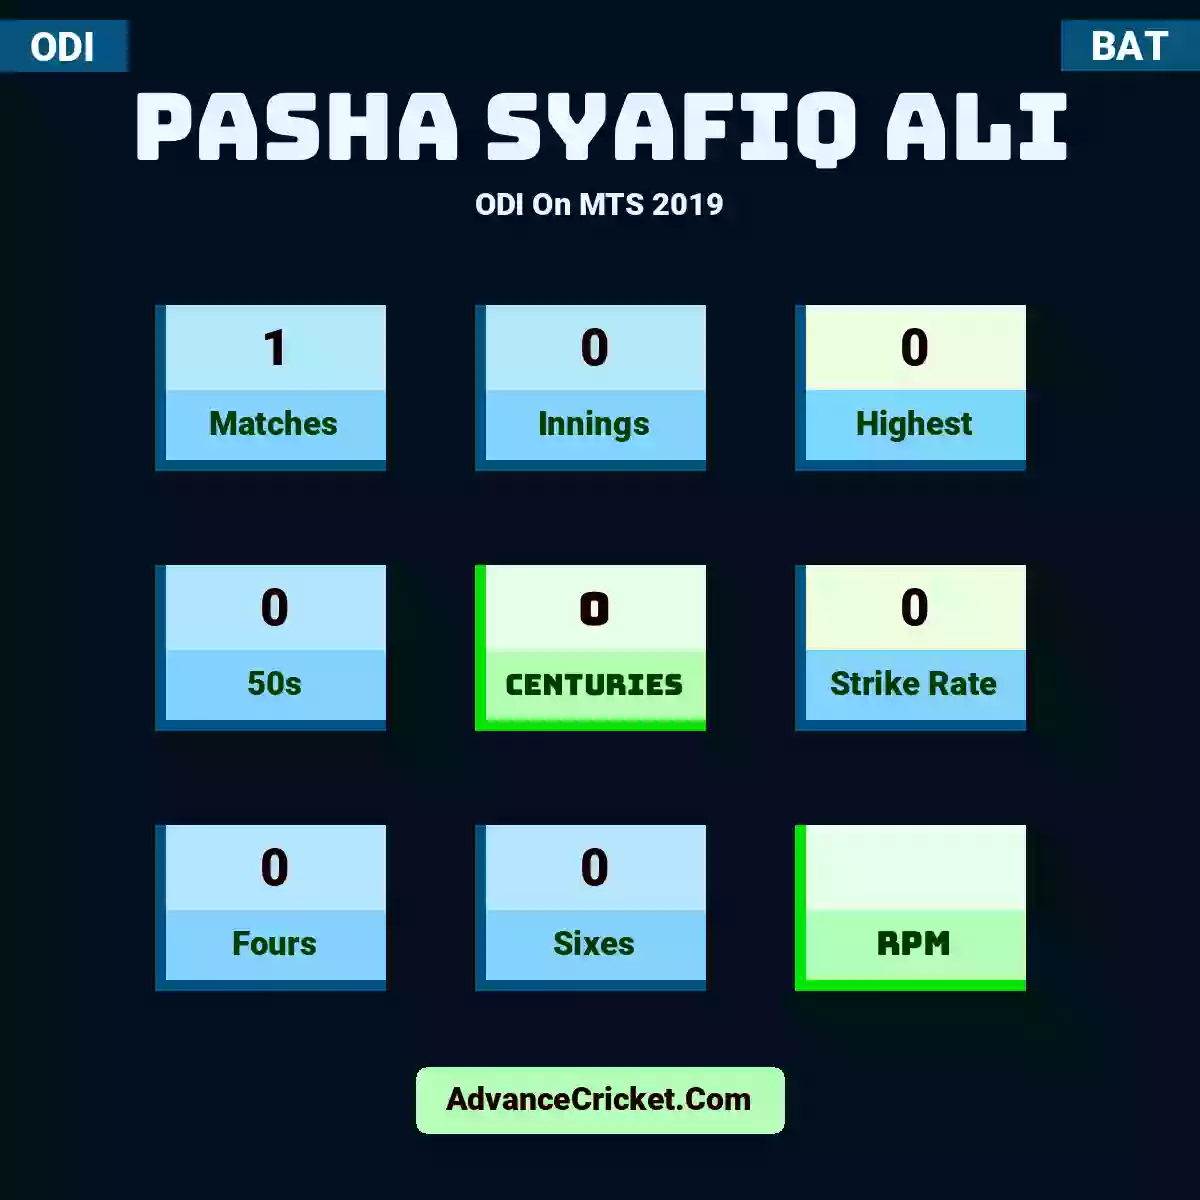 Pasha Syafiq Ali ODI  On MTS 2019, Pasha Syafiq Ali played 1 matches, scored 0 runs as highest, 0 half-centuries, and 0 centuries, with a strike rate of 0. P.Ali hit 0 fours and 0 sixes.